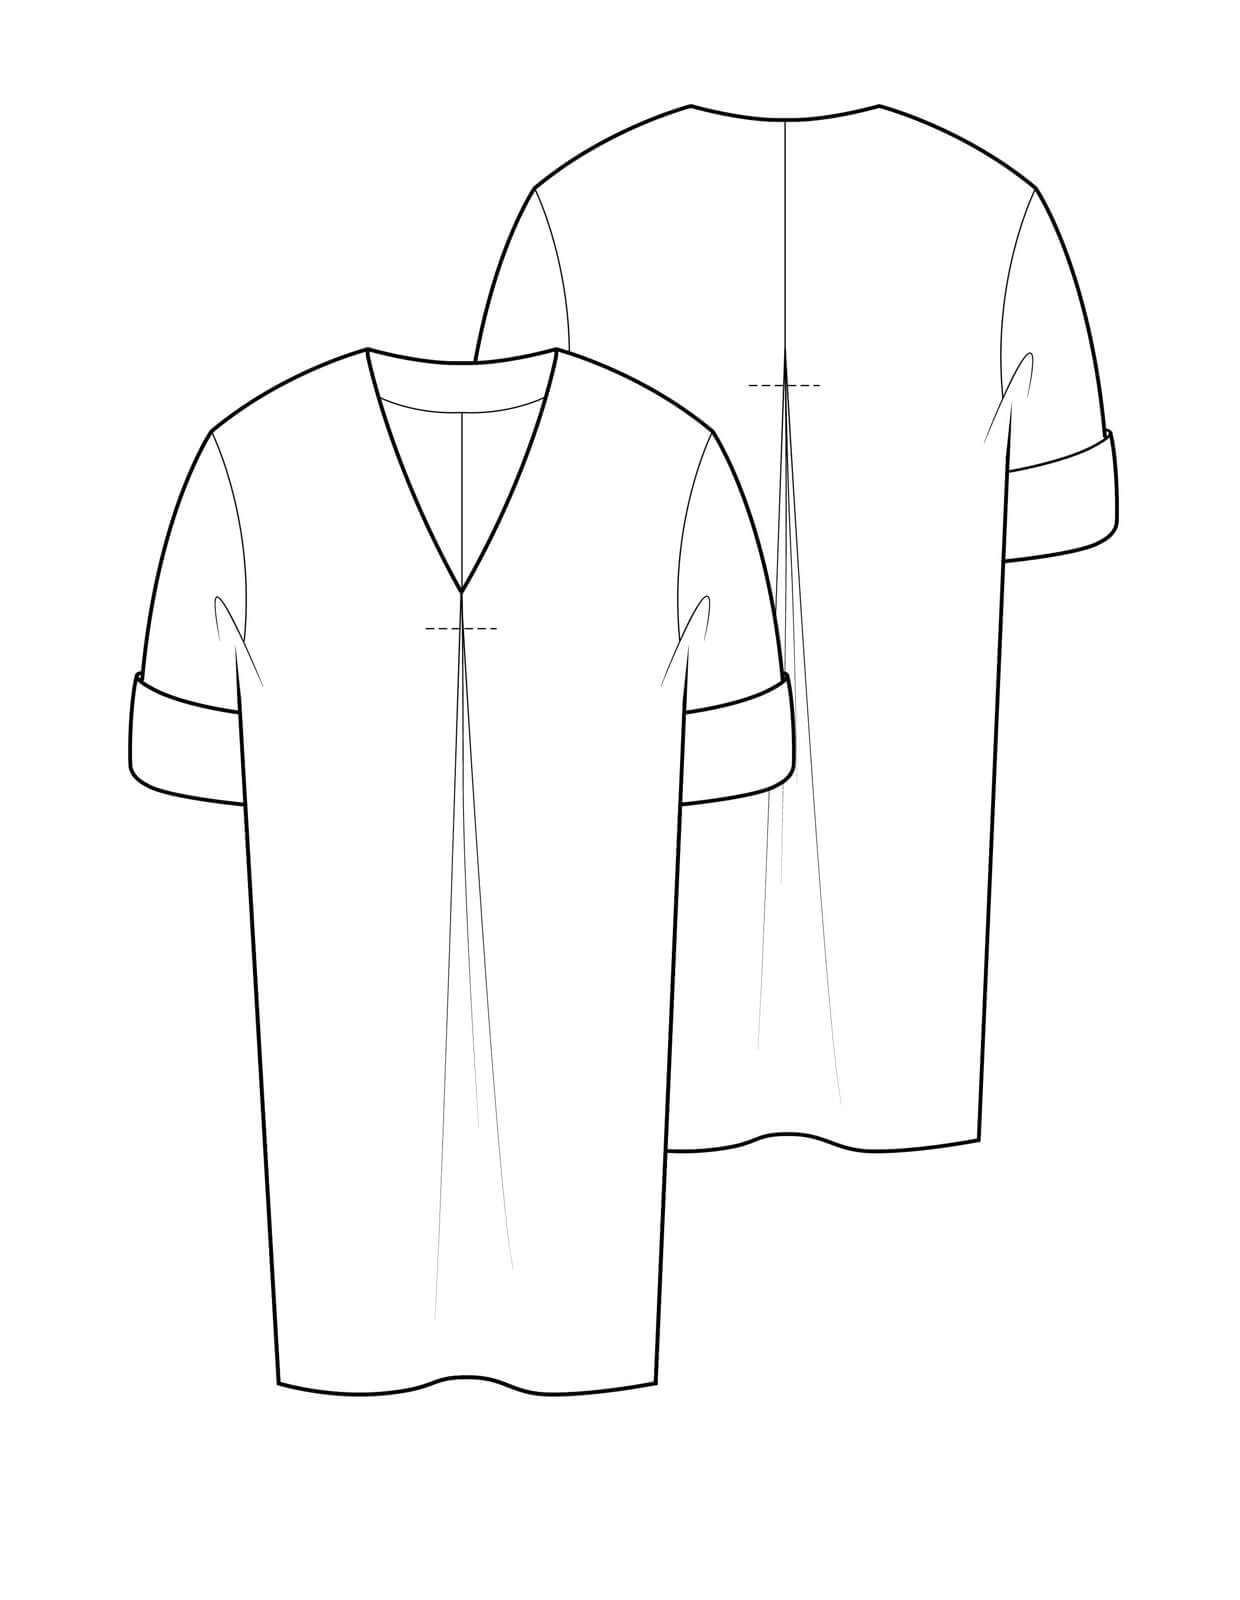 The Maker's Atelier V-Neck Shift Dress and Top - PDF Pattern